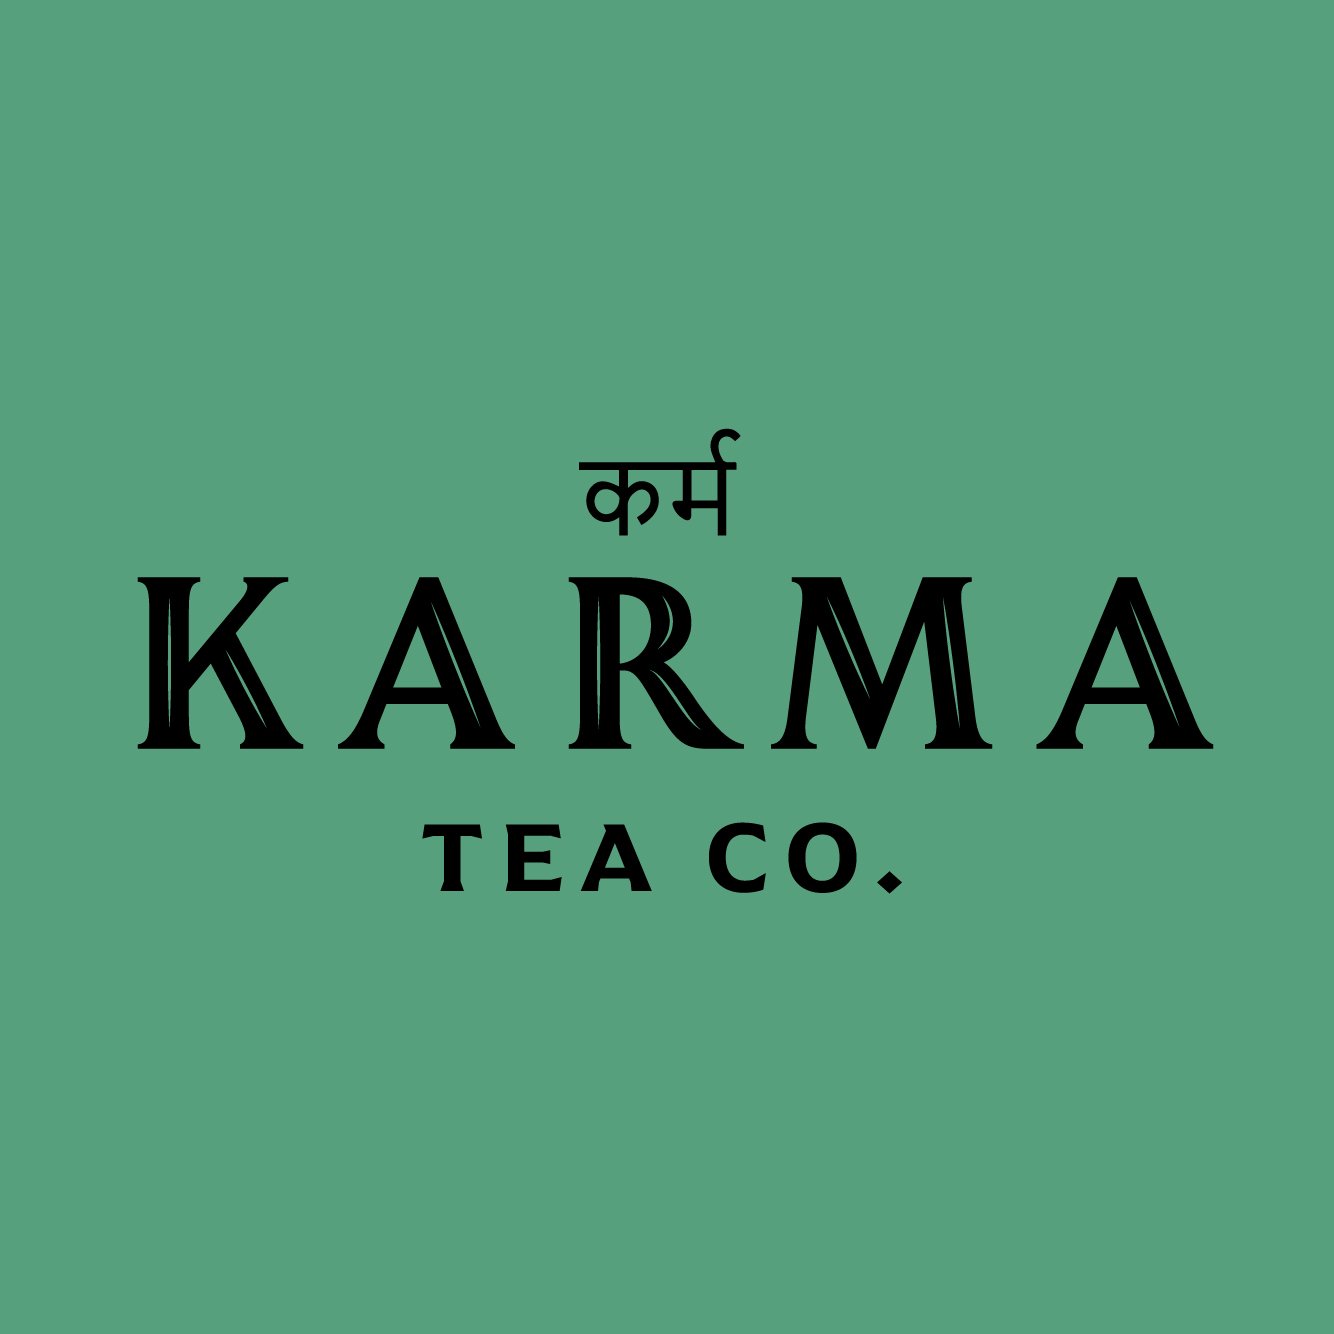 Fine teas direct from gardens across South Asia – The Karma Tea Co.